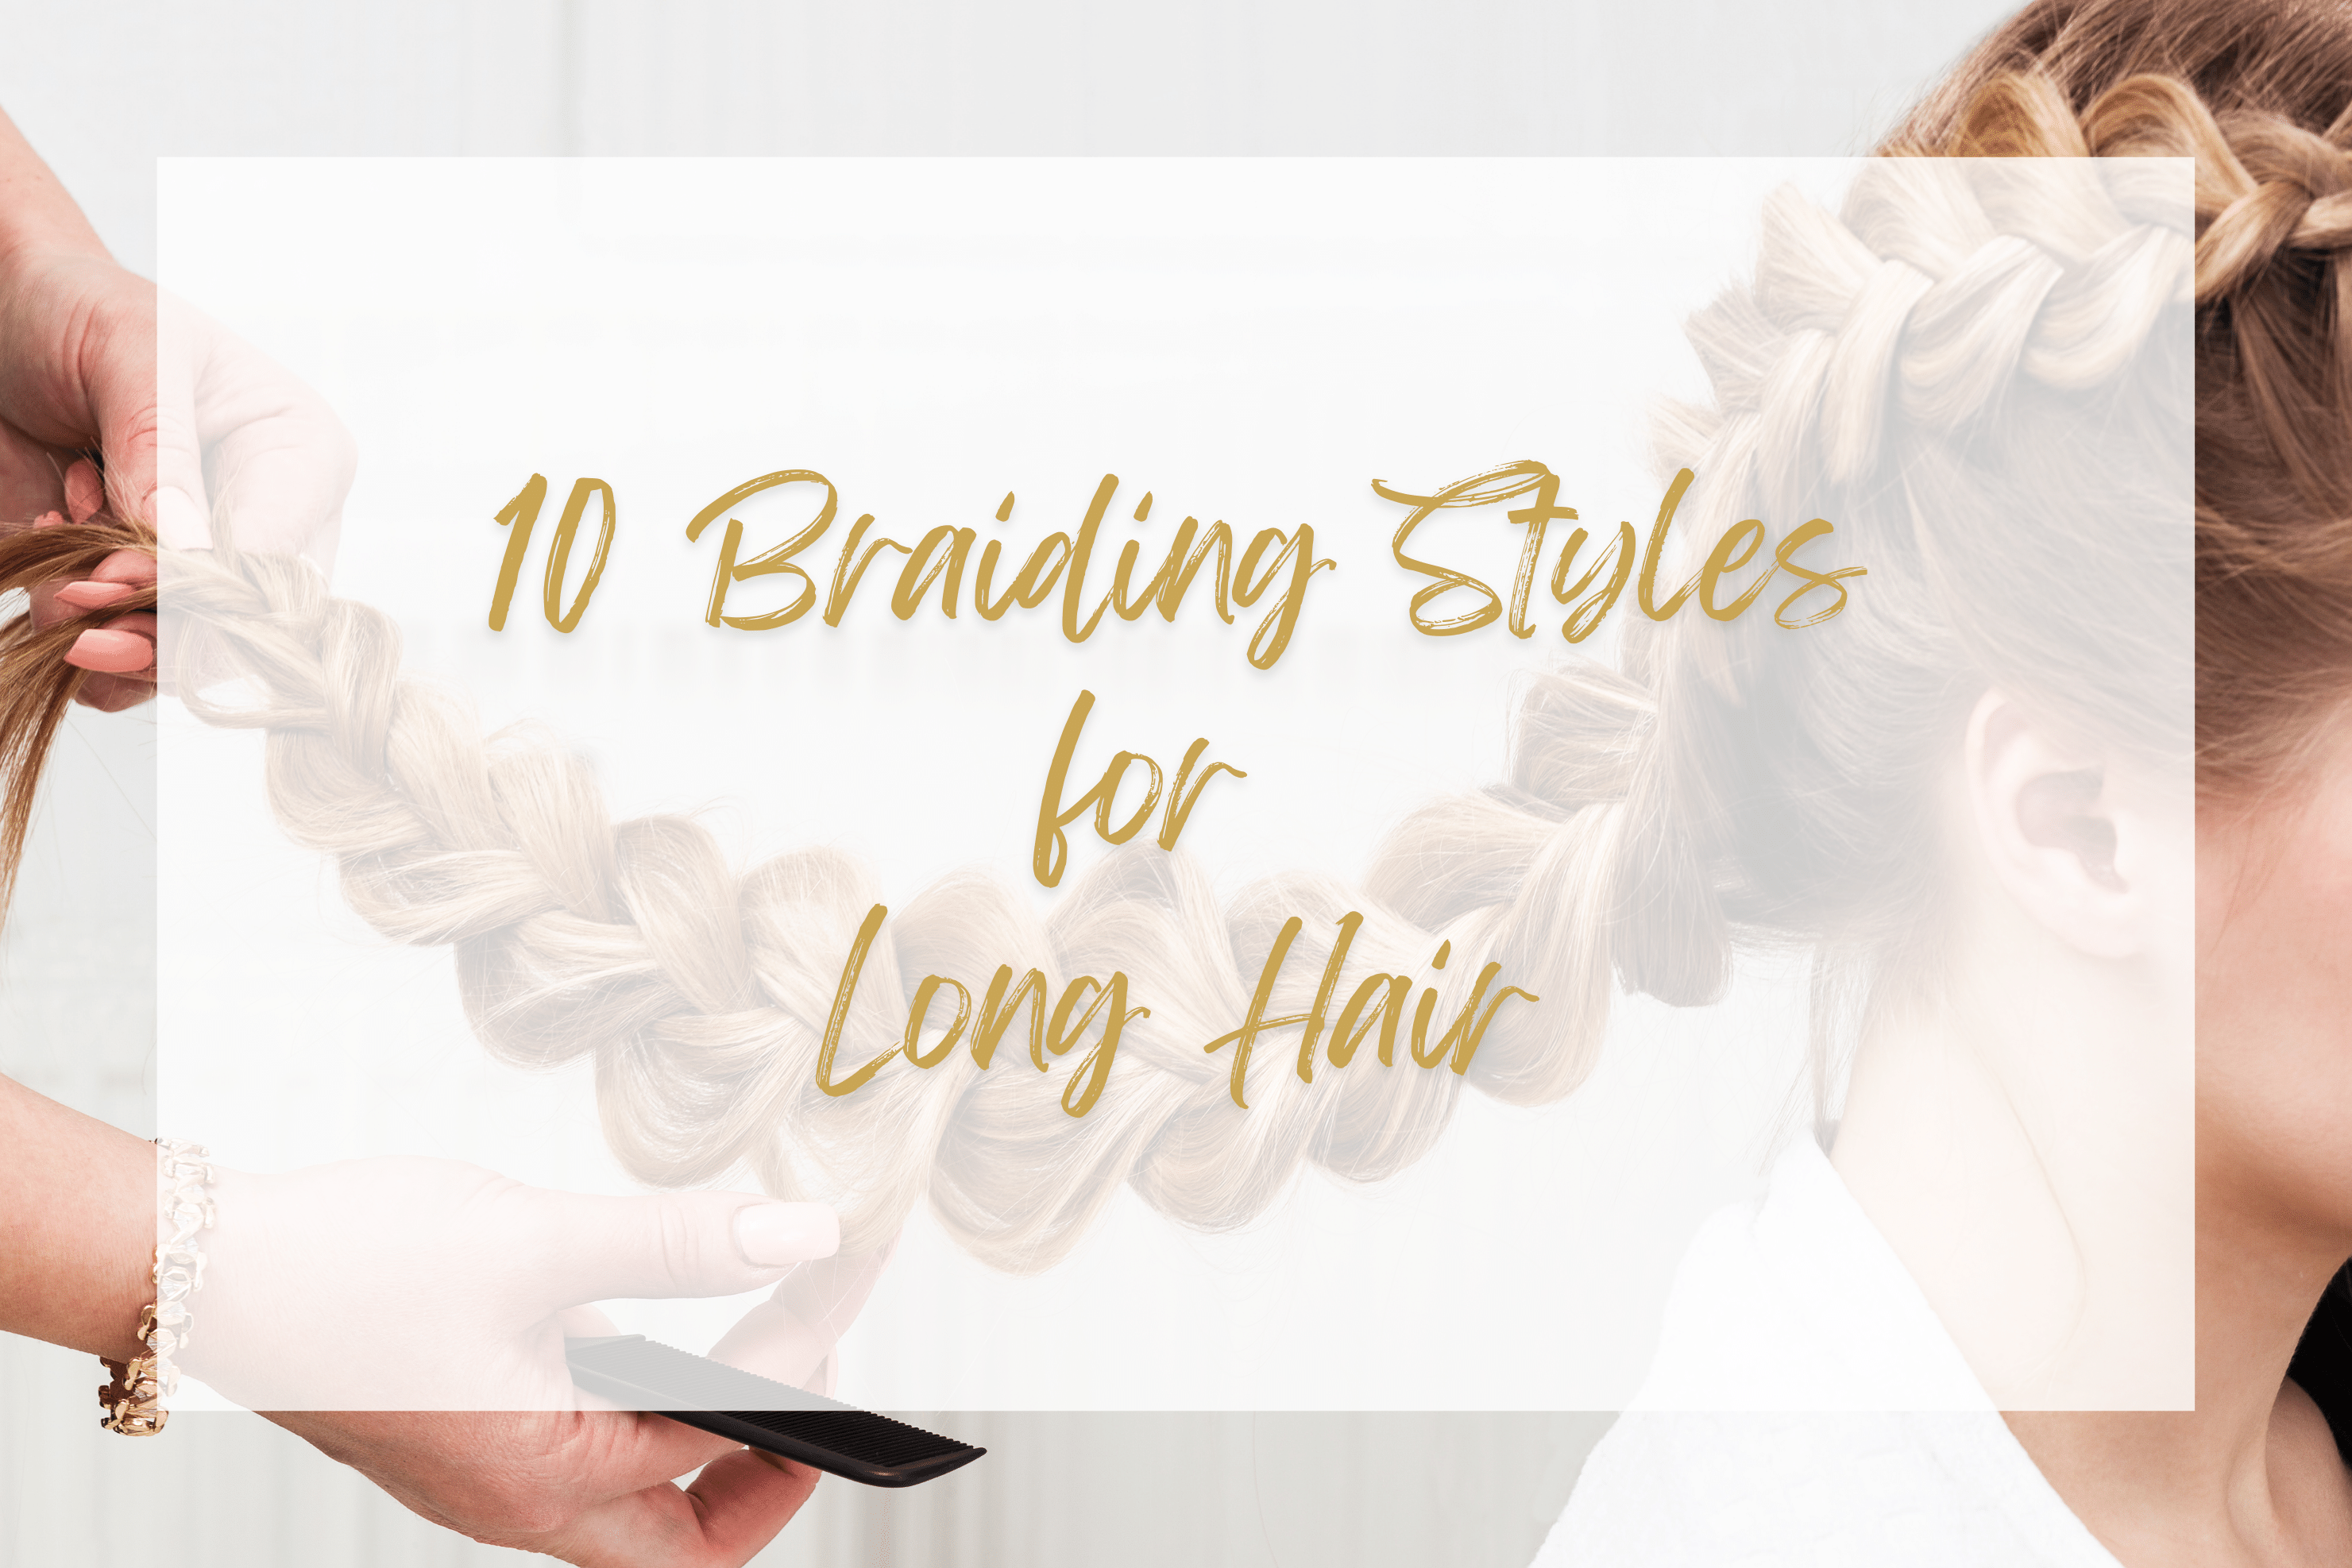 10 Braiding Styles for Long Hair